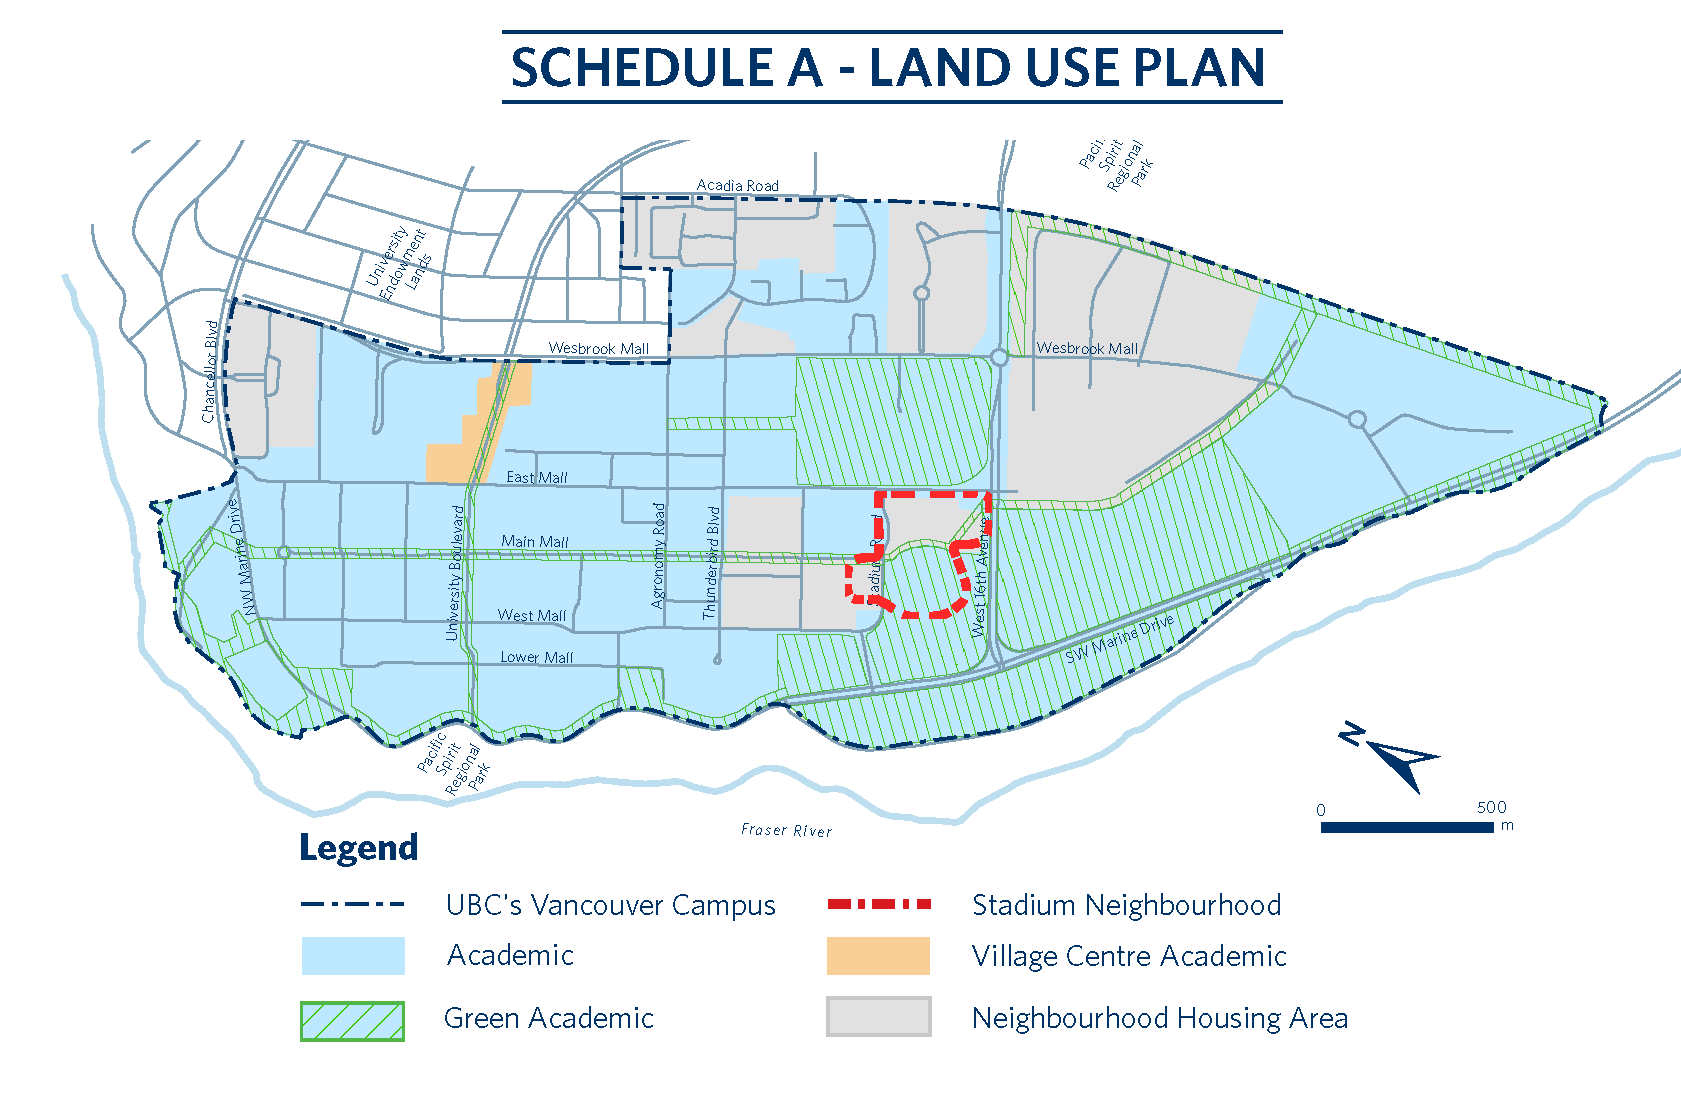 Schedule A - Land Use Plan